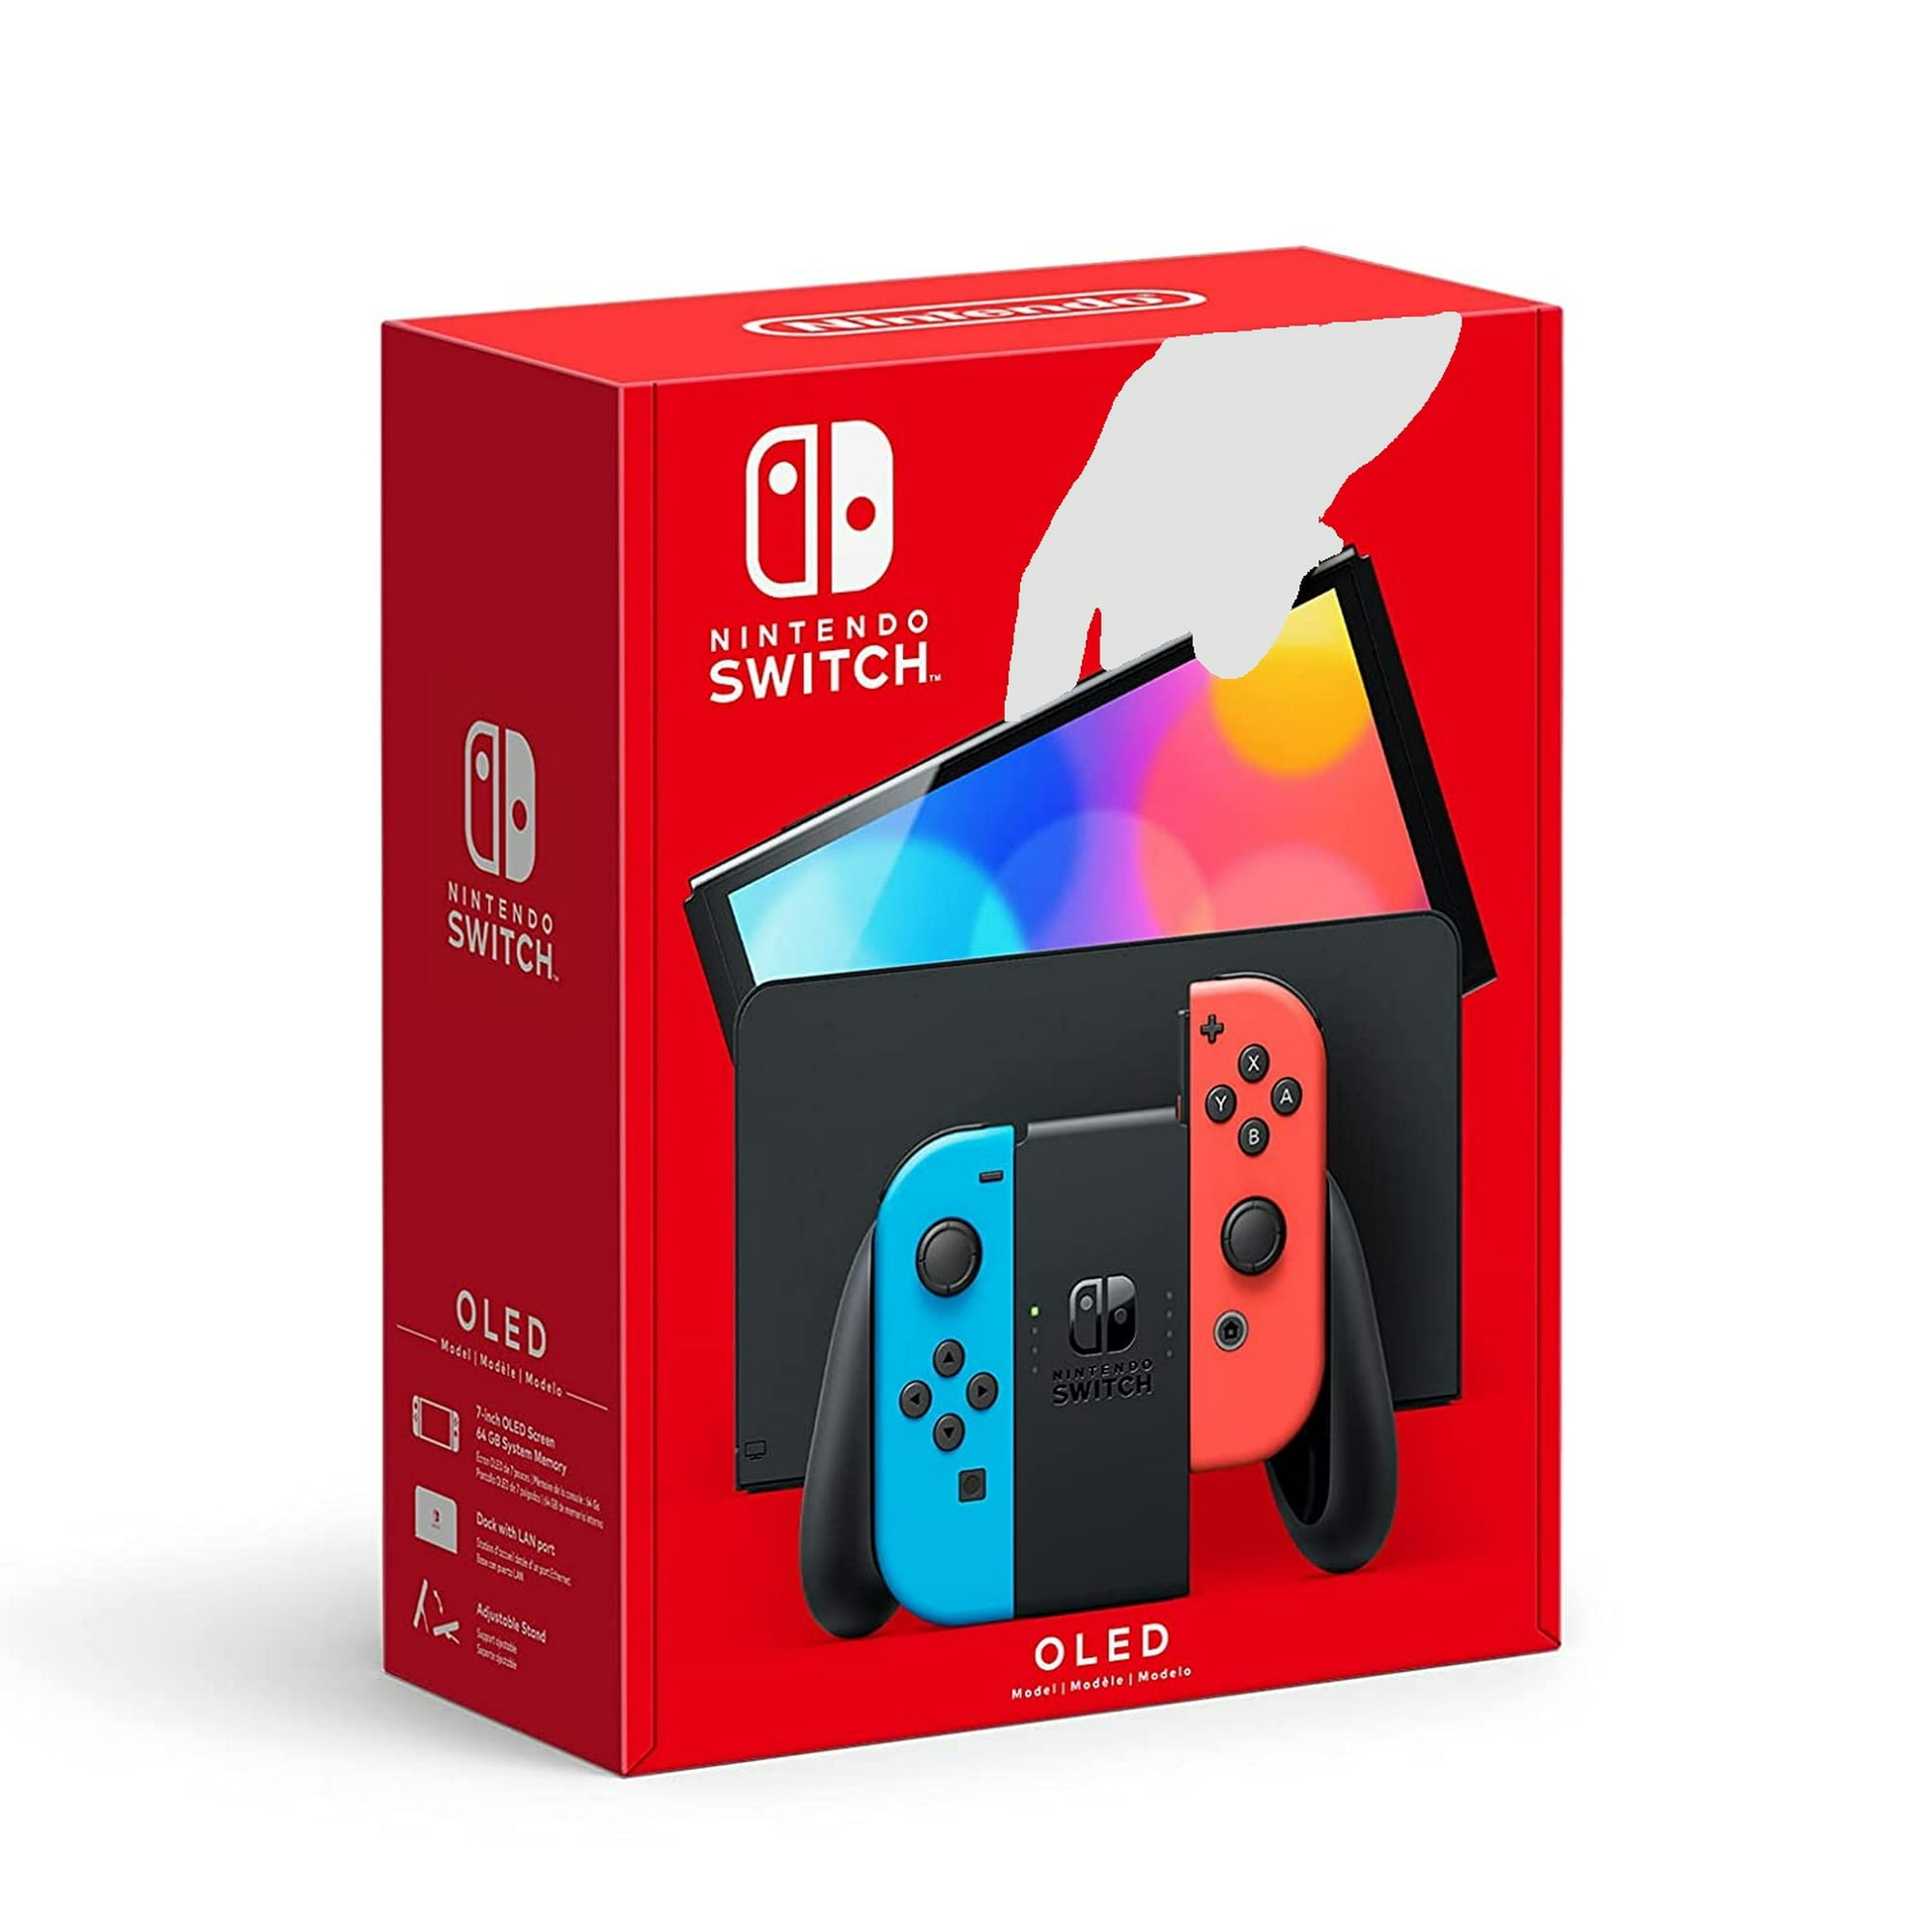 Nintendo Switch OLED Model with Red & Blue Joy-Con - Walmart.com